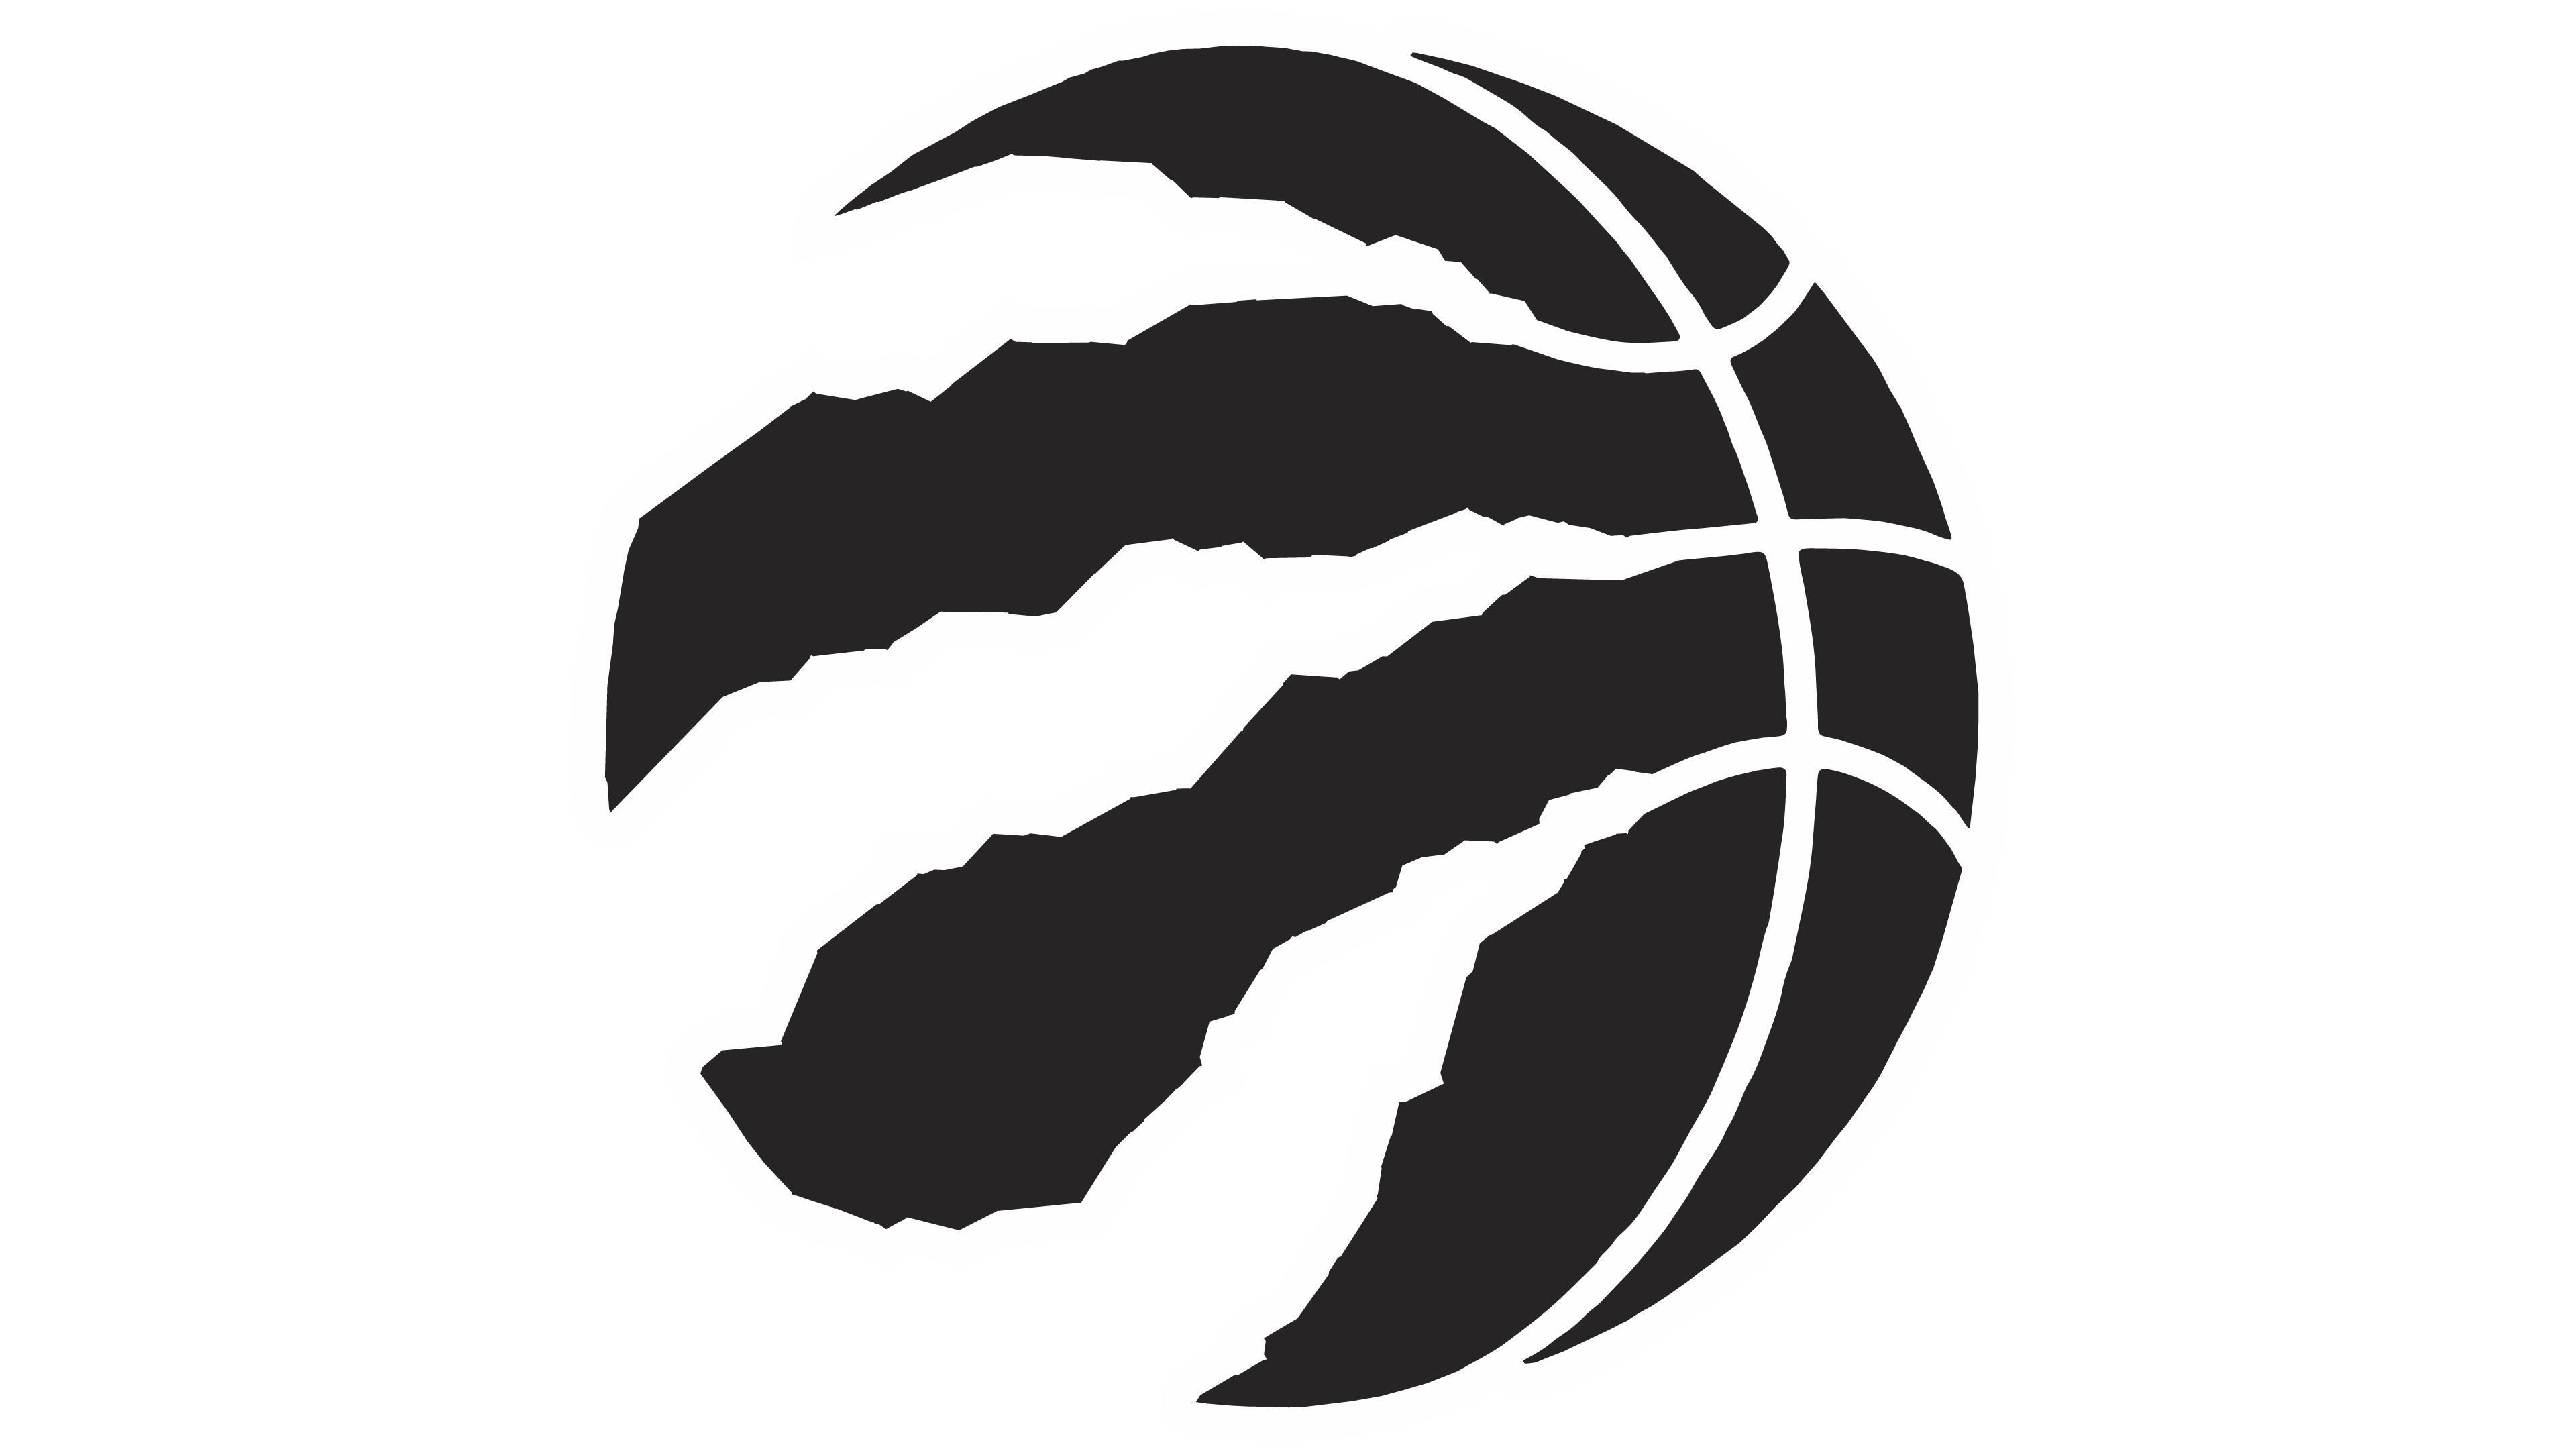 Claw Logo - Toronto Raptors logo - Interesting History of the Team Name and emblem